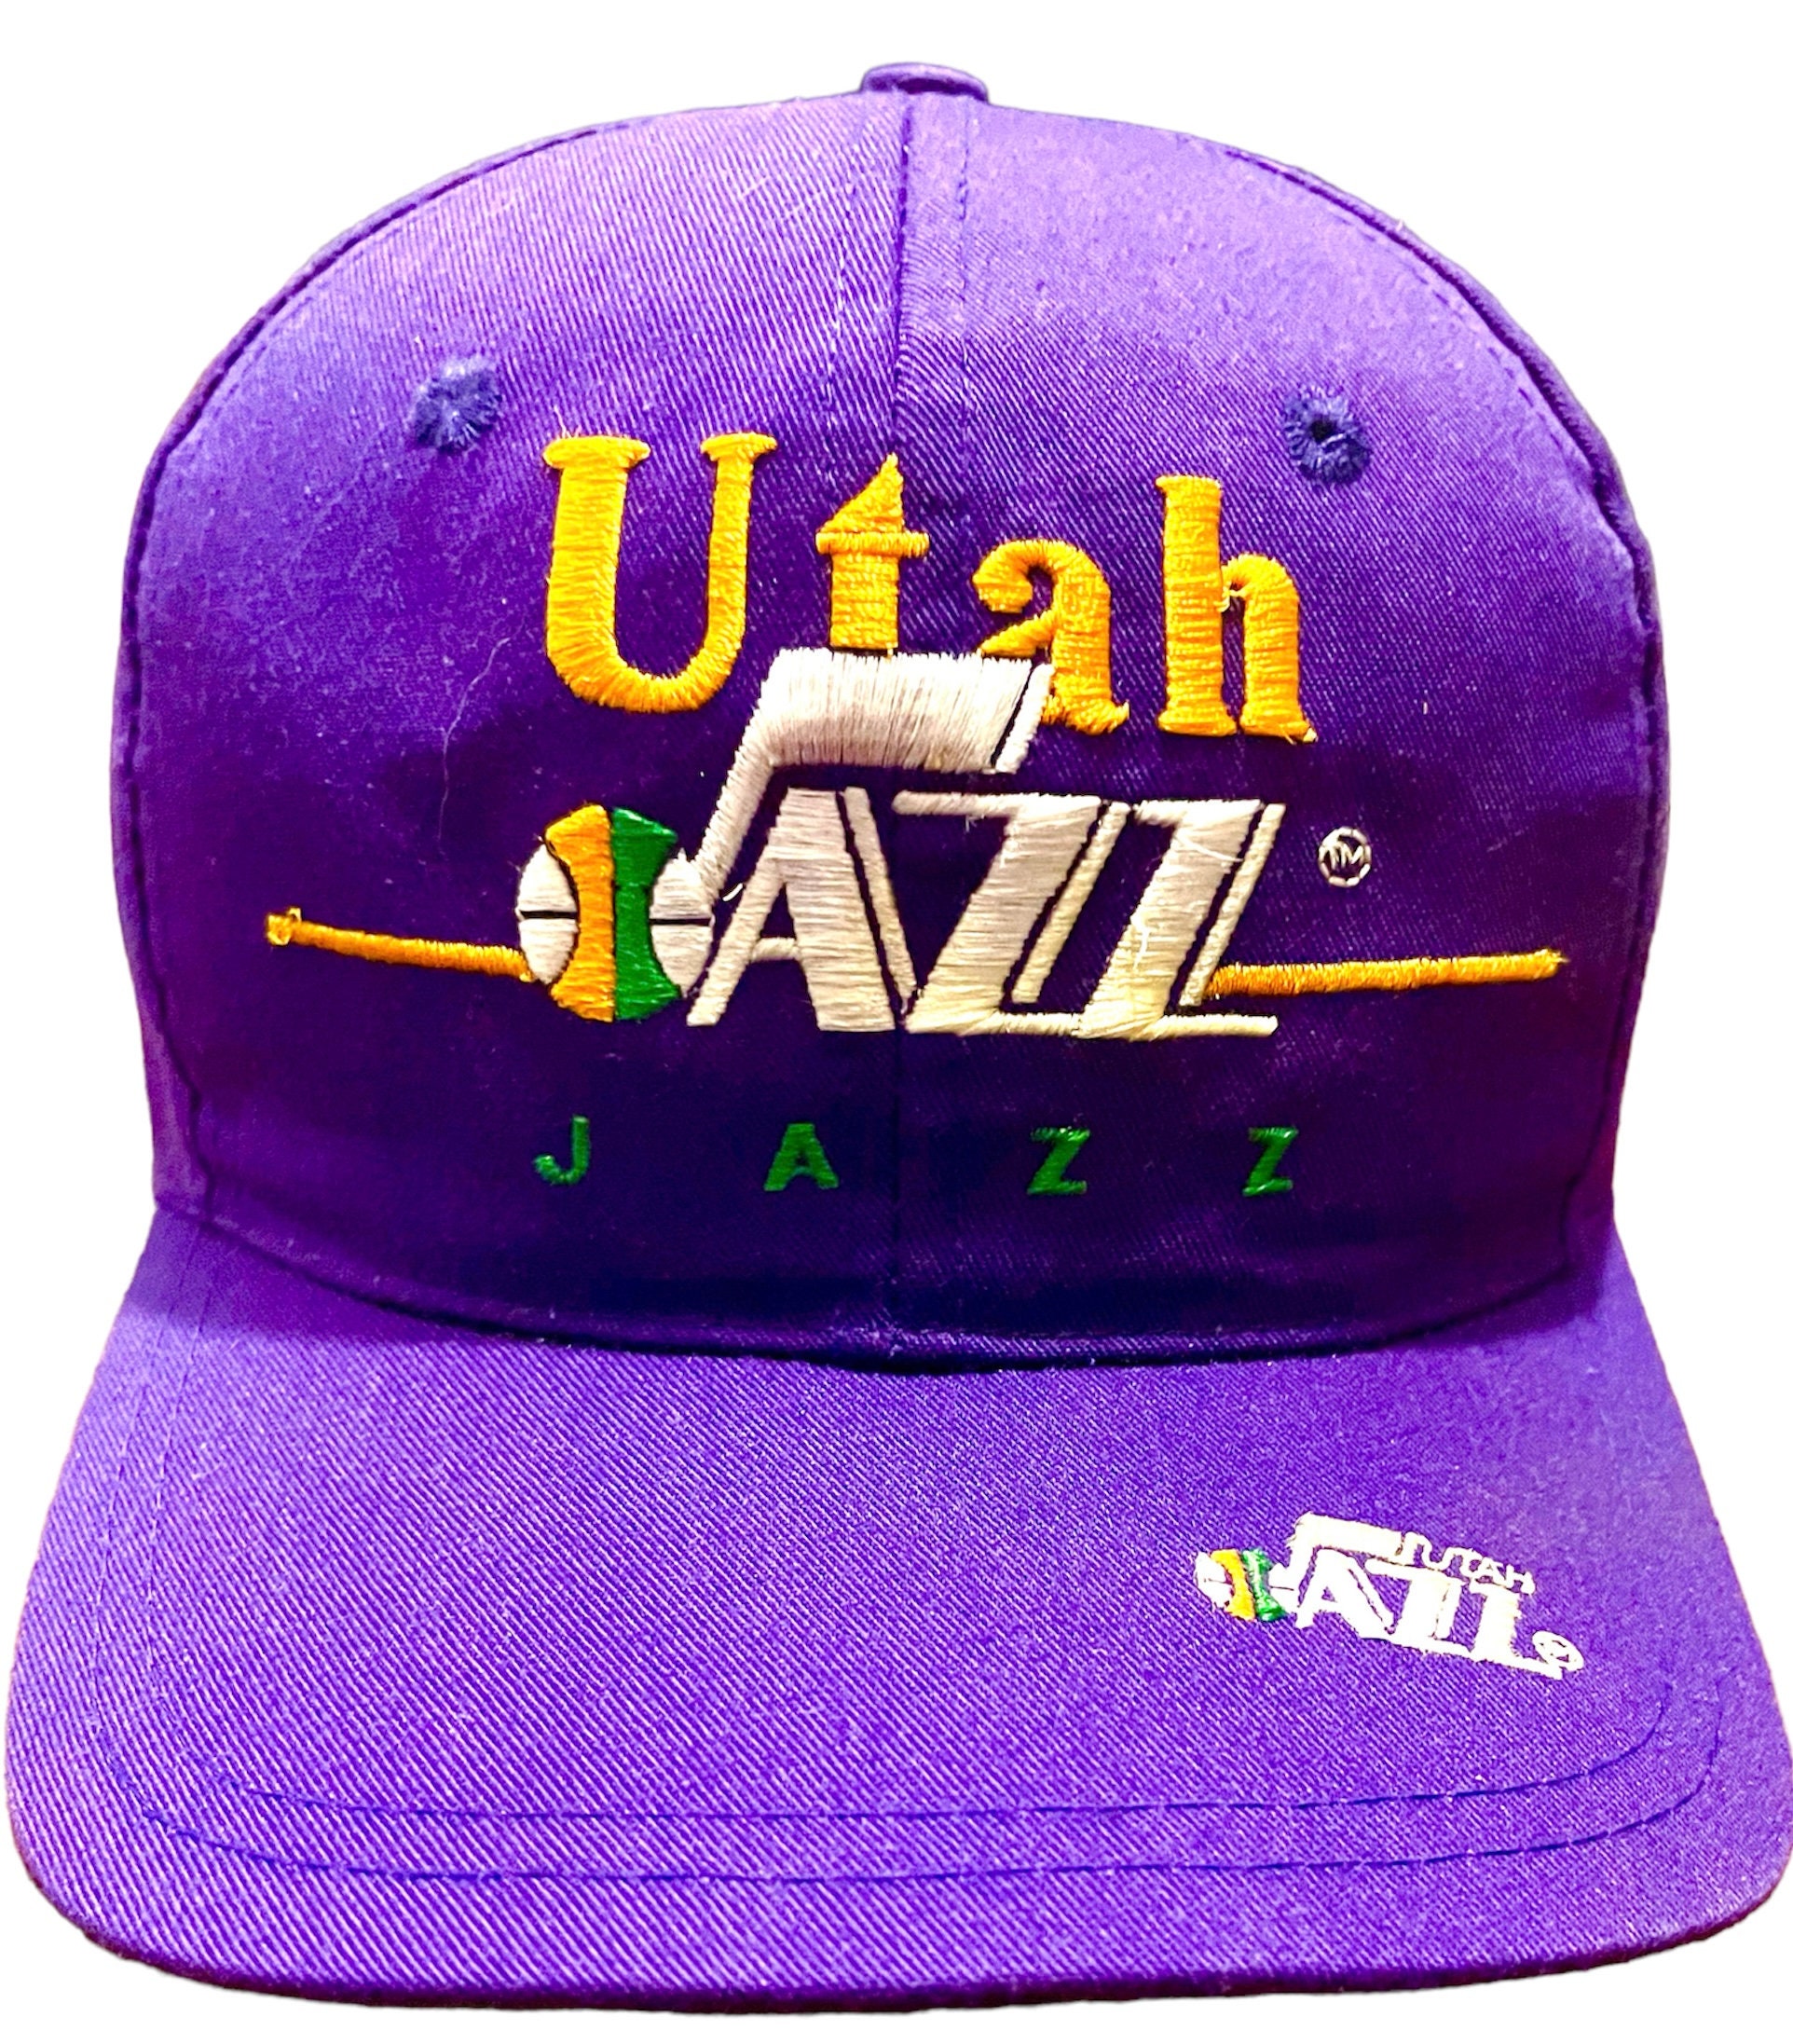 Unisex Vintage Utah Jazz Jersey - The Vintage Twin